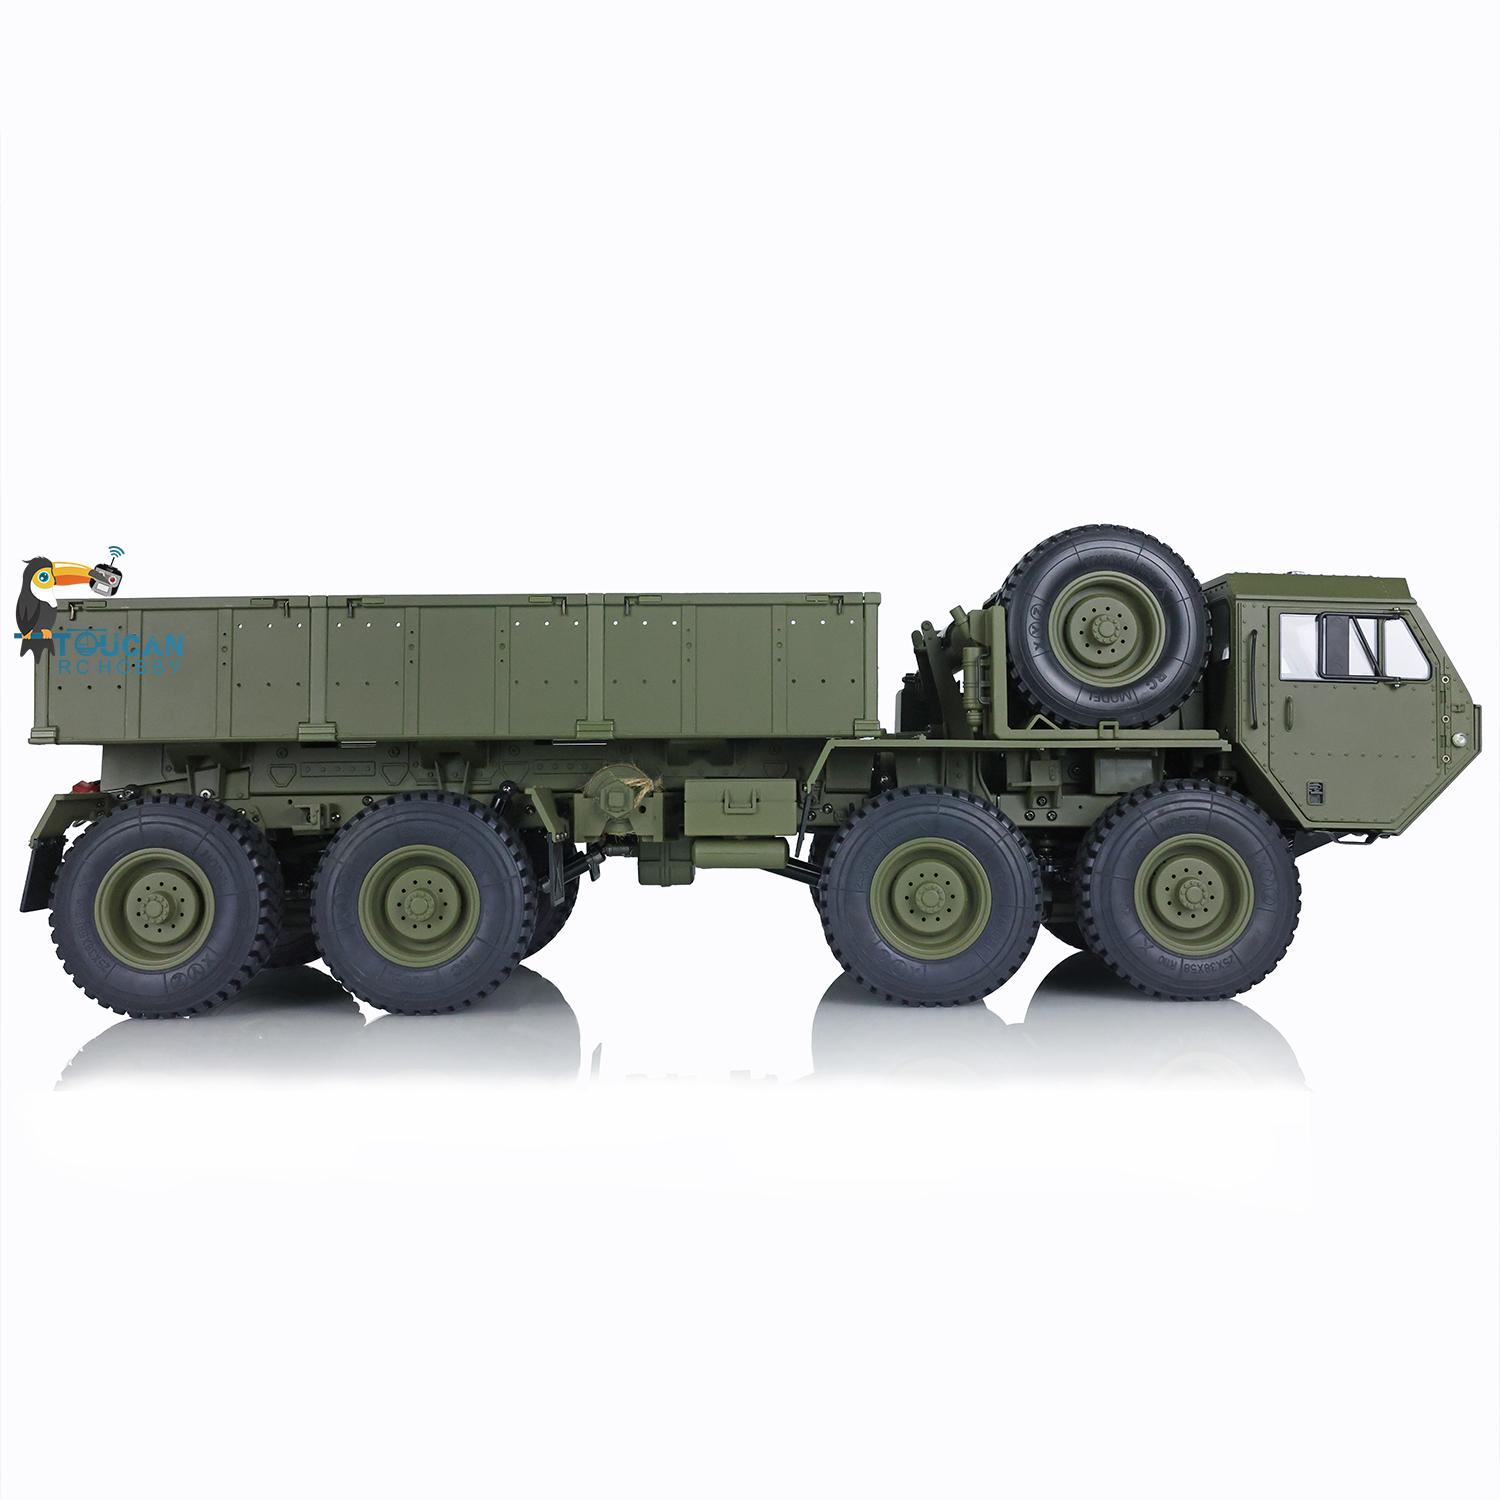 Metal Chassis 1/12 8*8 US Military RC Truck Model ESC Servo Motor P801 Radio